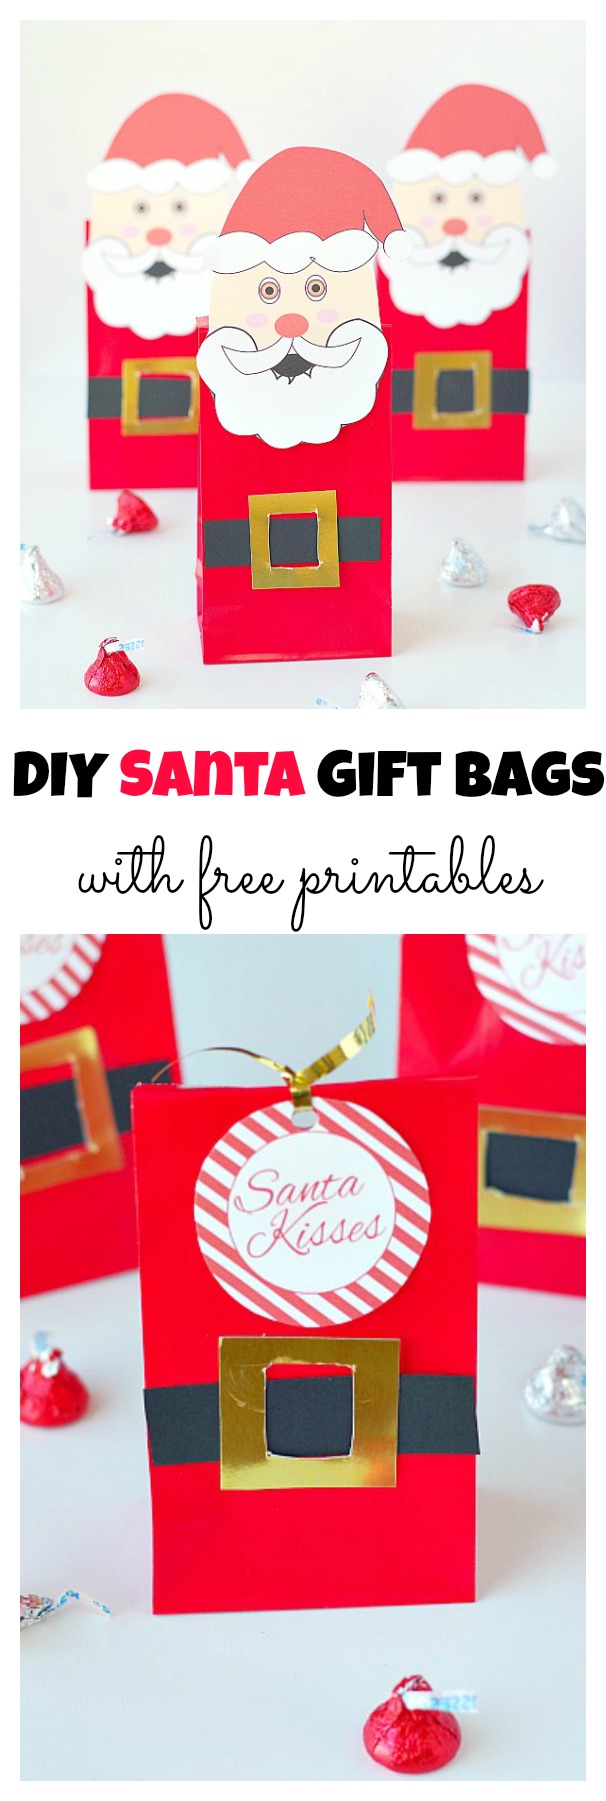 DIY Santa Gift Bags with free printables